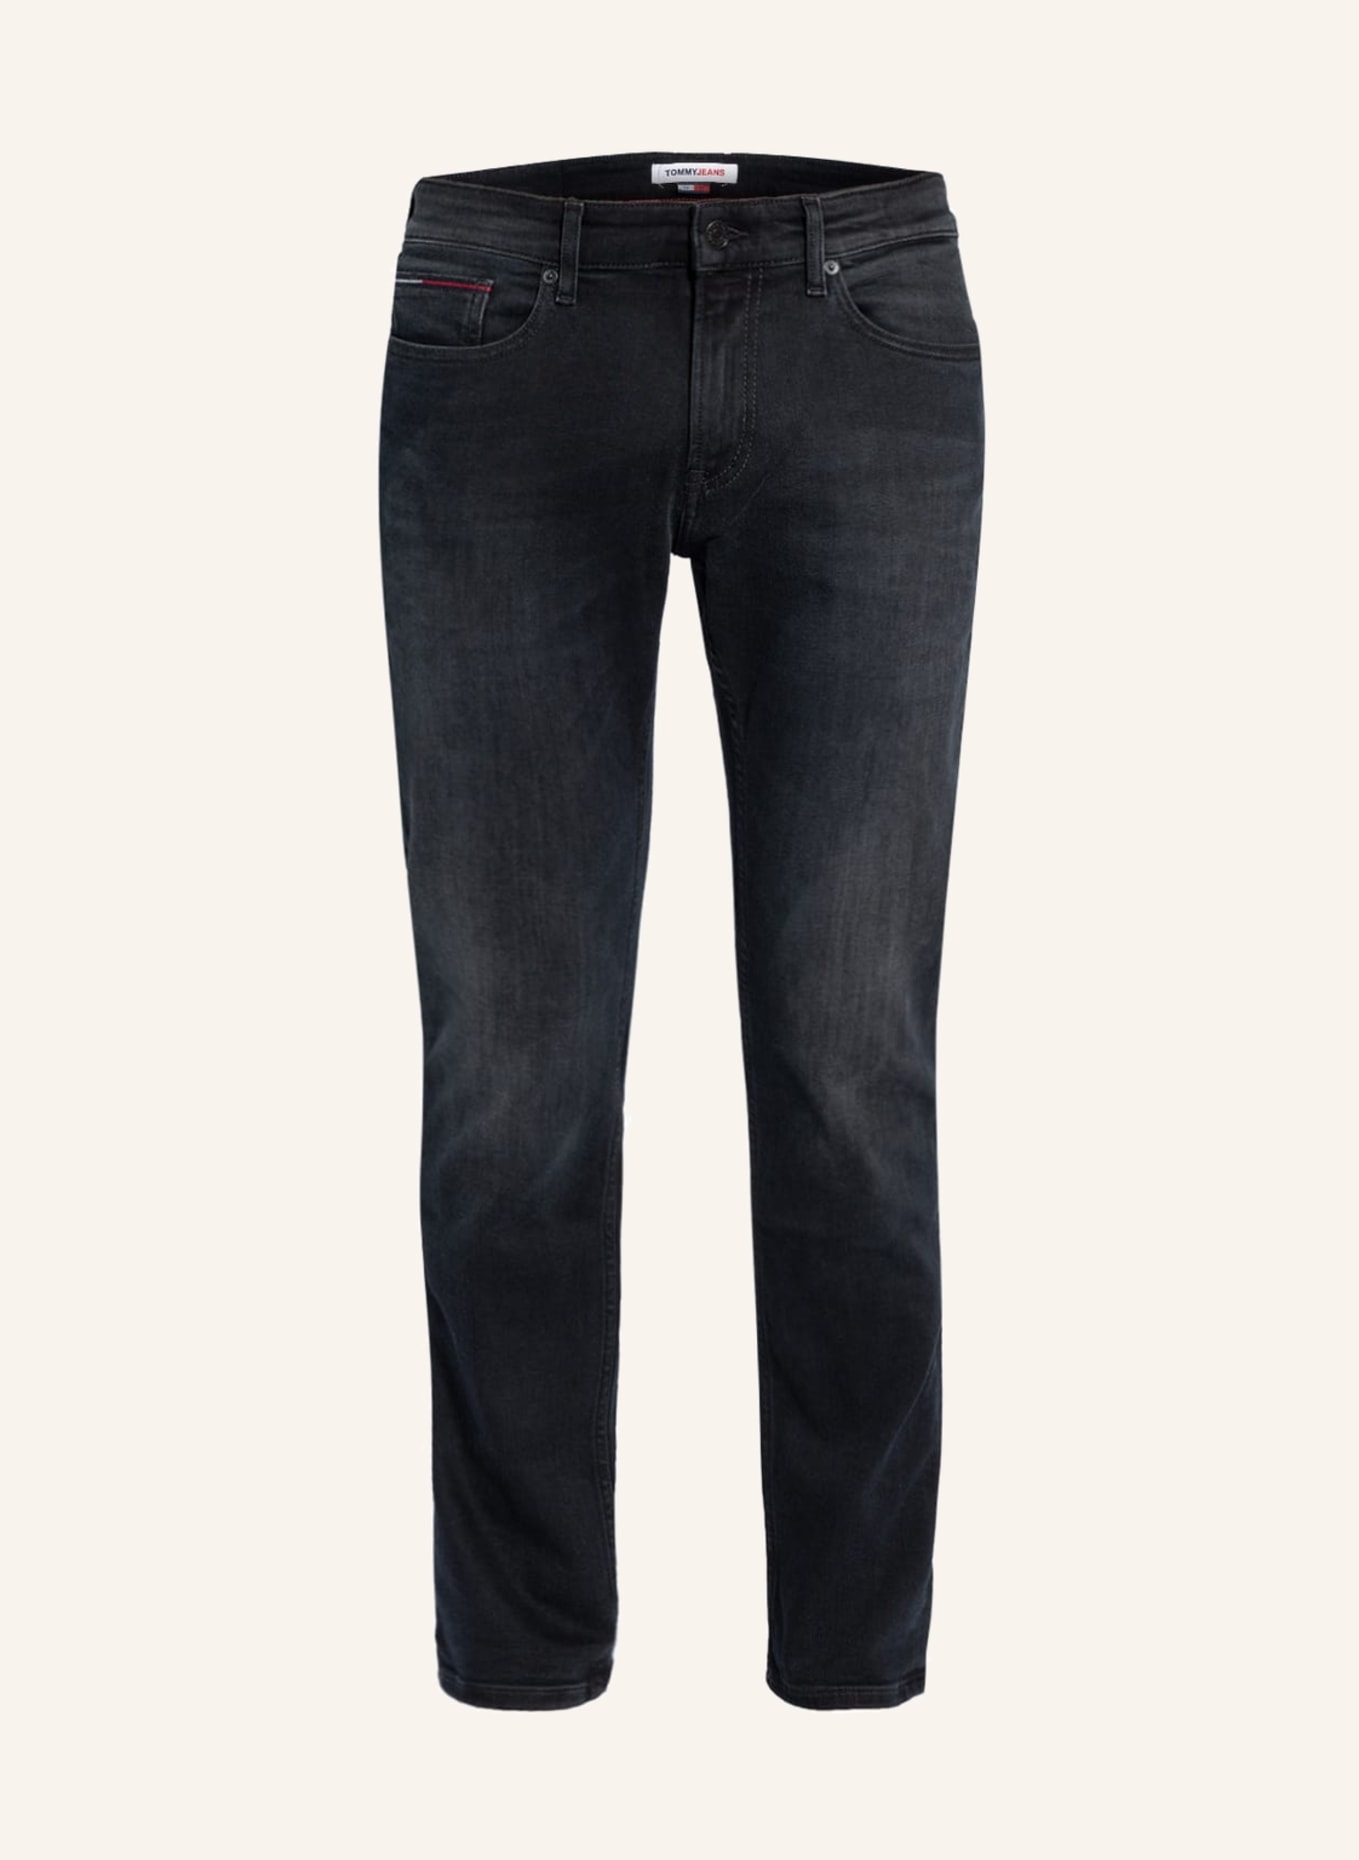 TOMMY JEANS Jeans SCANTON Slim Fit, Farbe: 1BZ Dynamic Jacob Black (Bild 1)